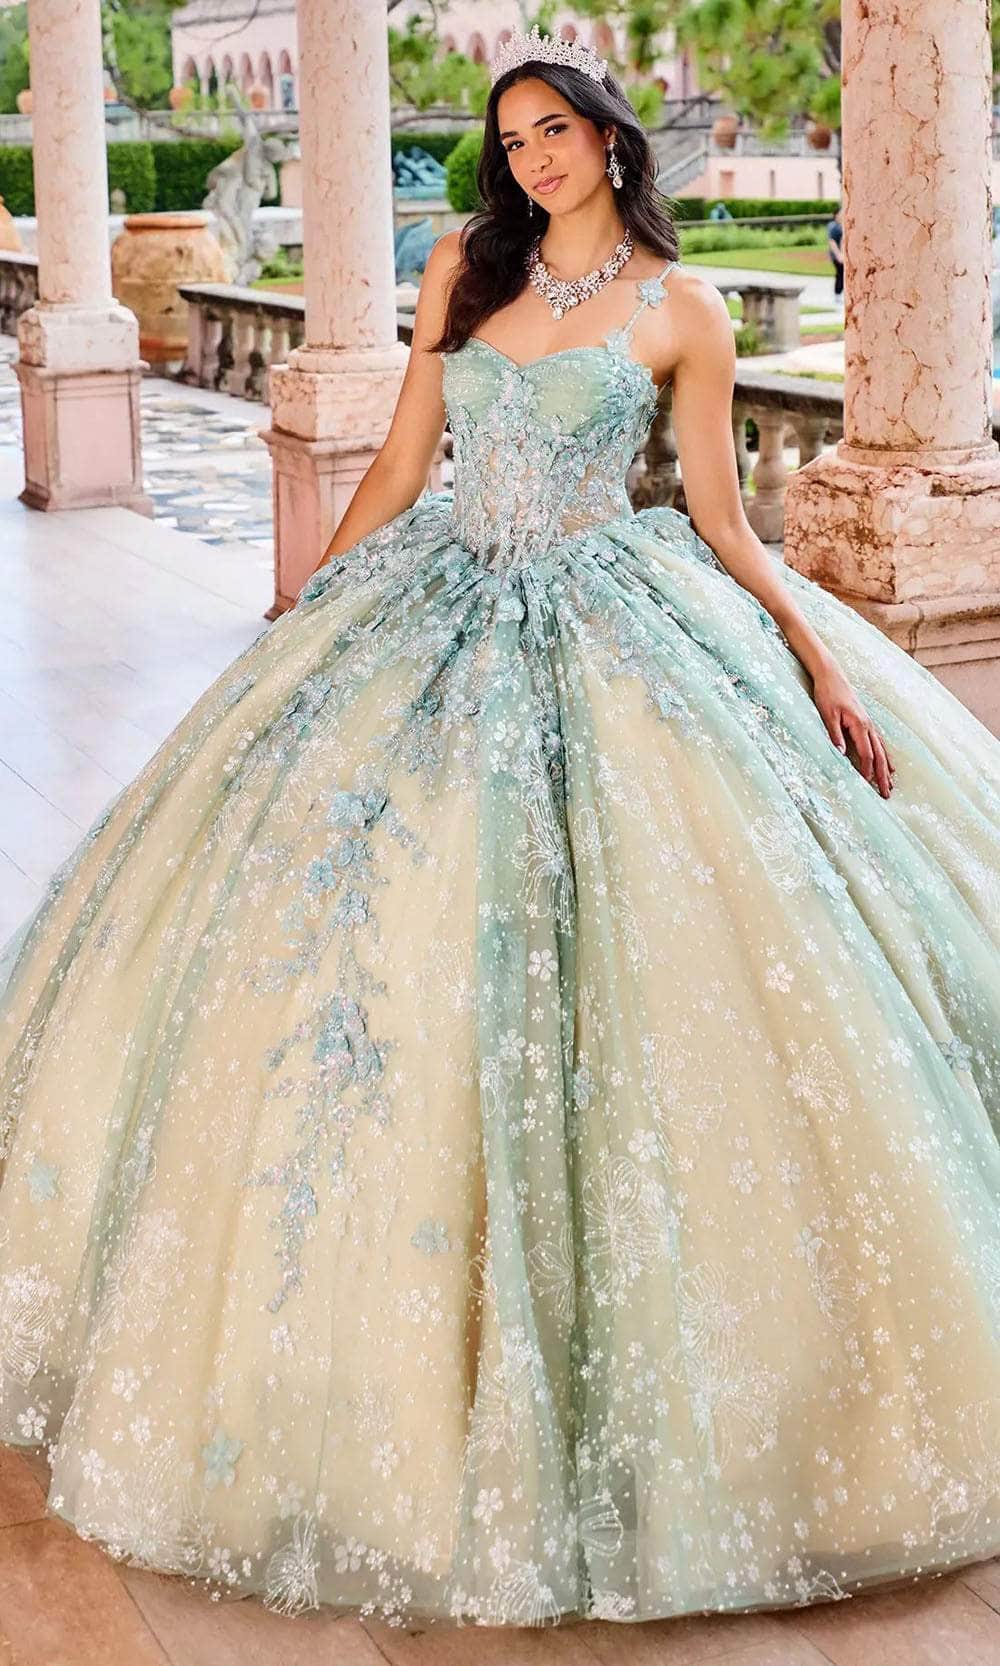 Princesa by Ariana Vara PR30158 - Sleeveless Prom Gown
